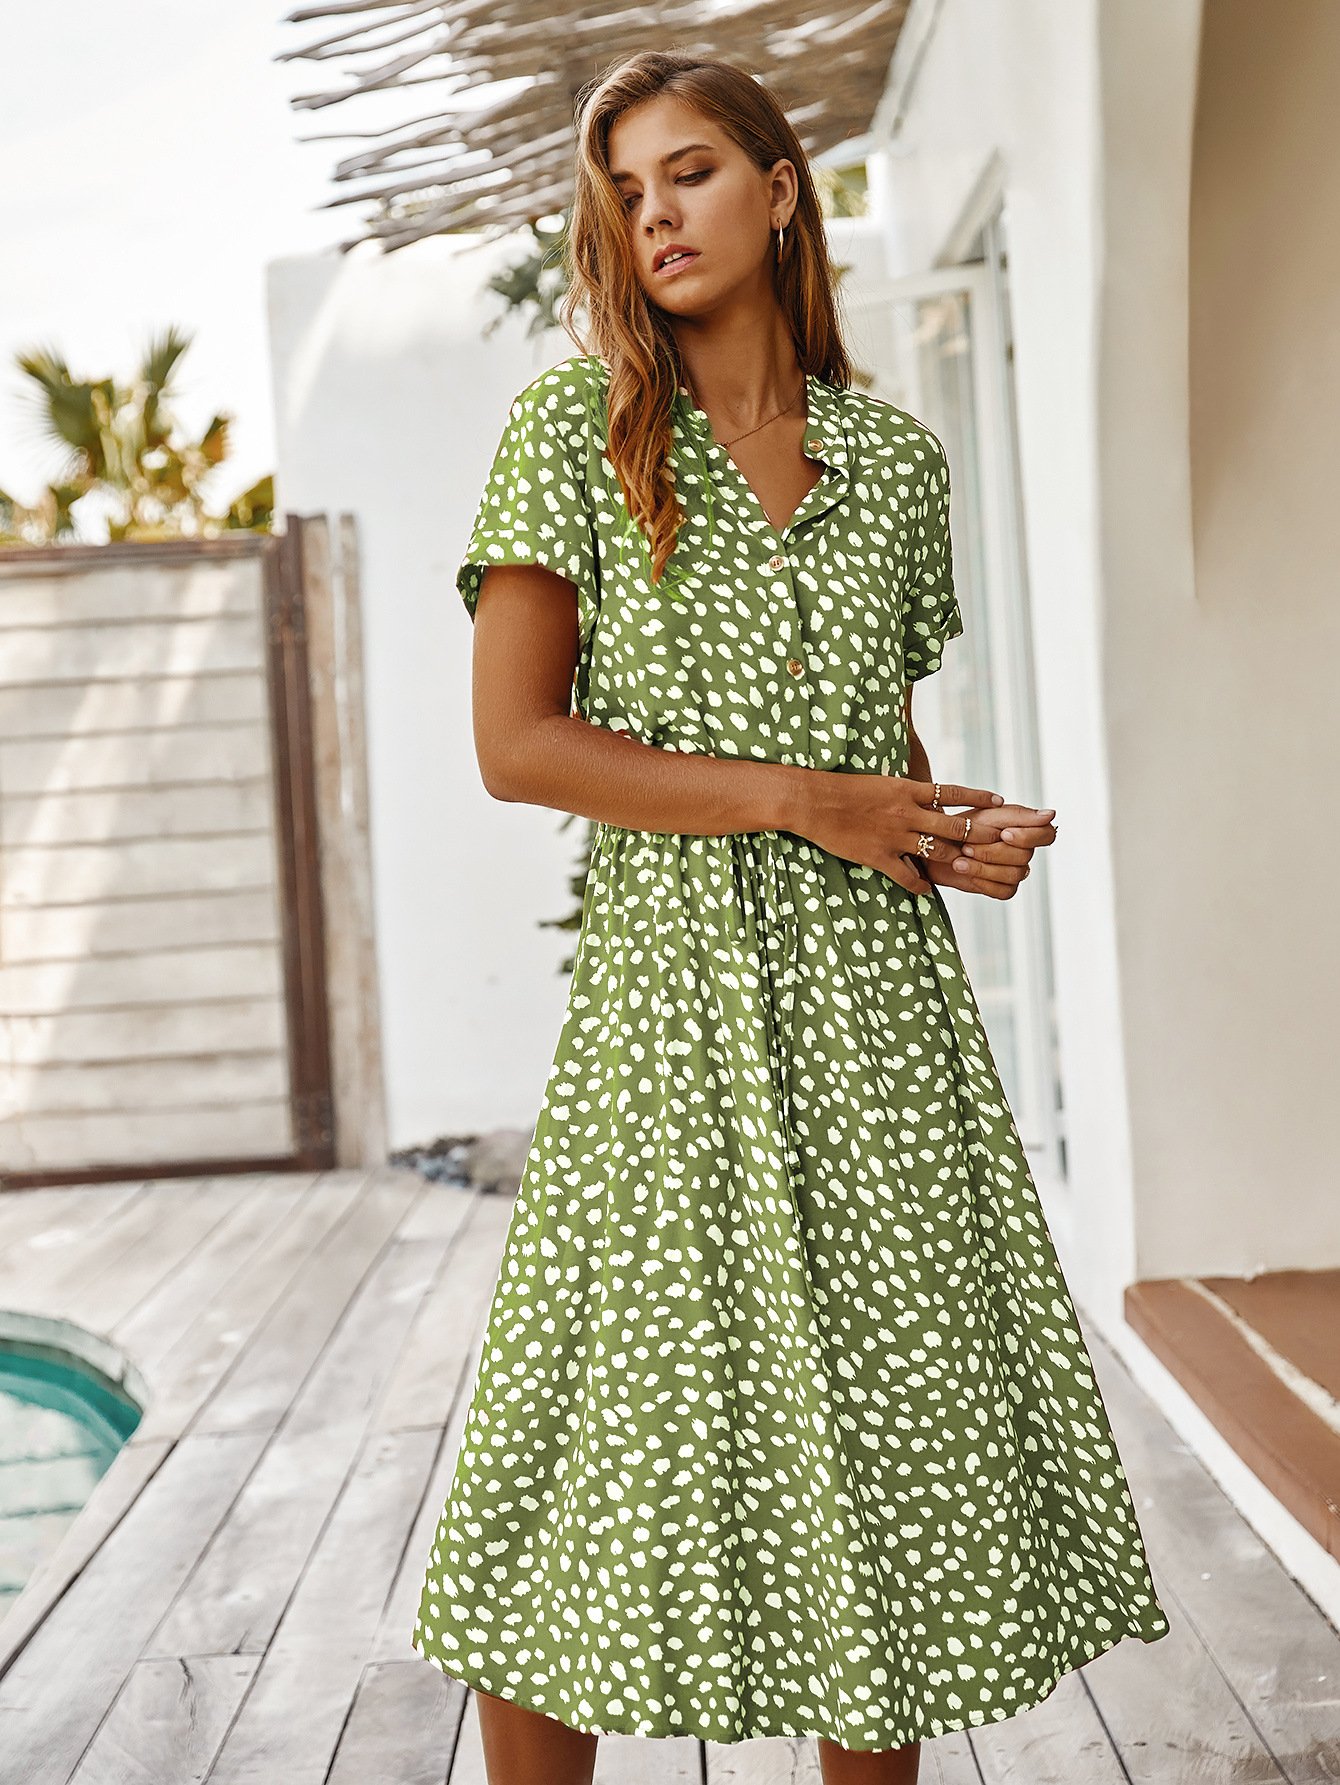 New Polka Dot Short Sleeve Dress - 7 Colors 6 Sizes